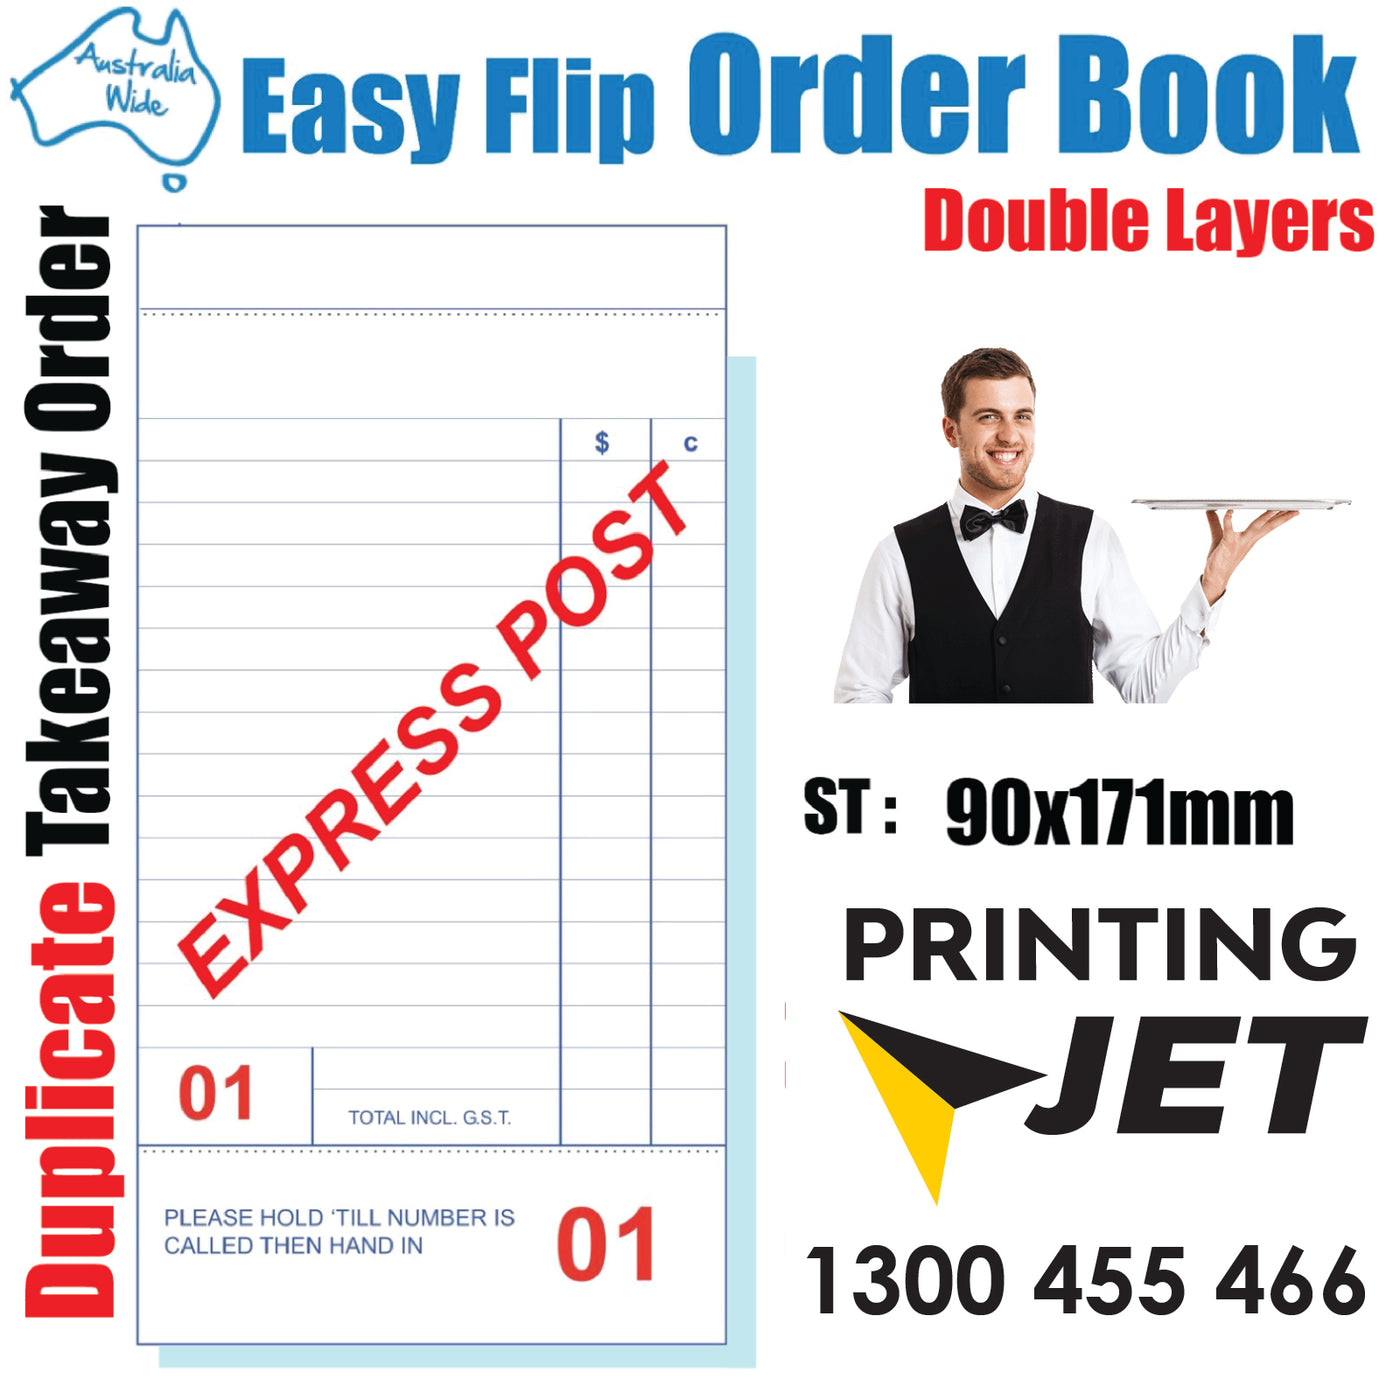 Restaurant Docket Order Book